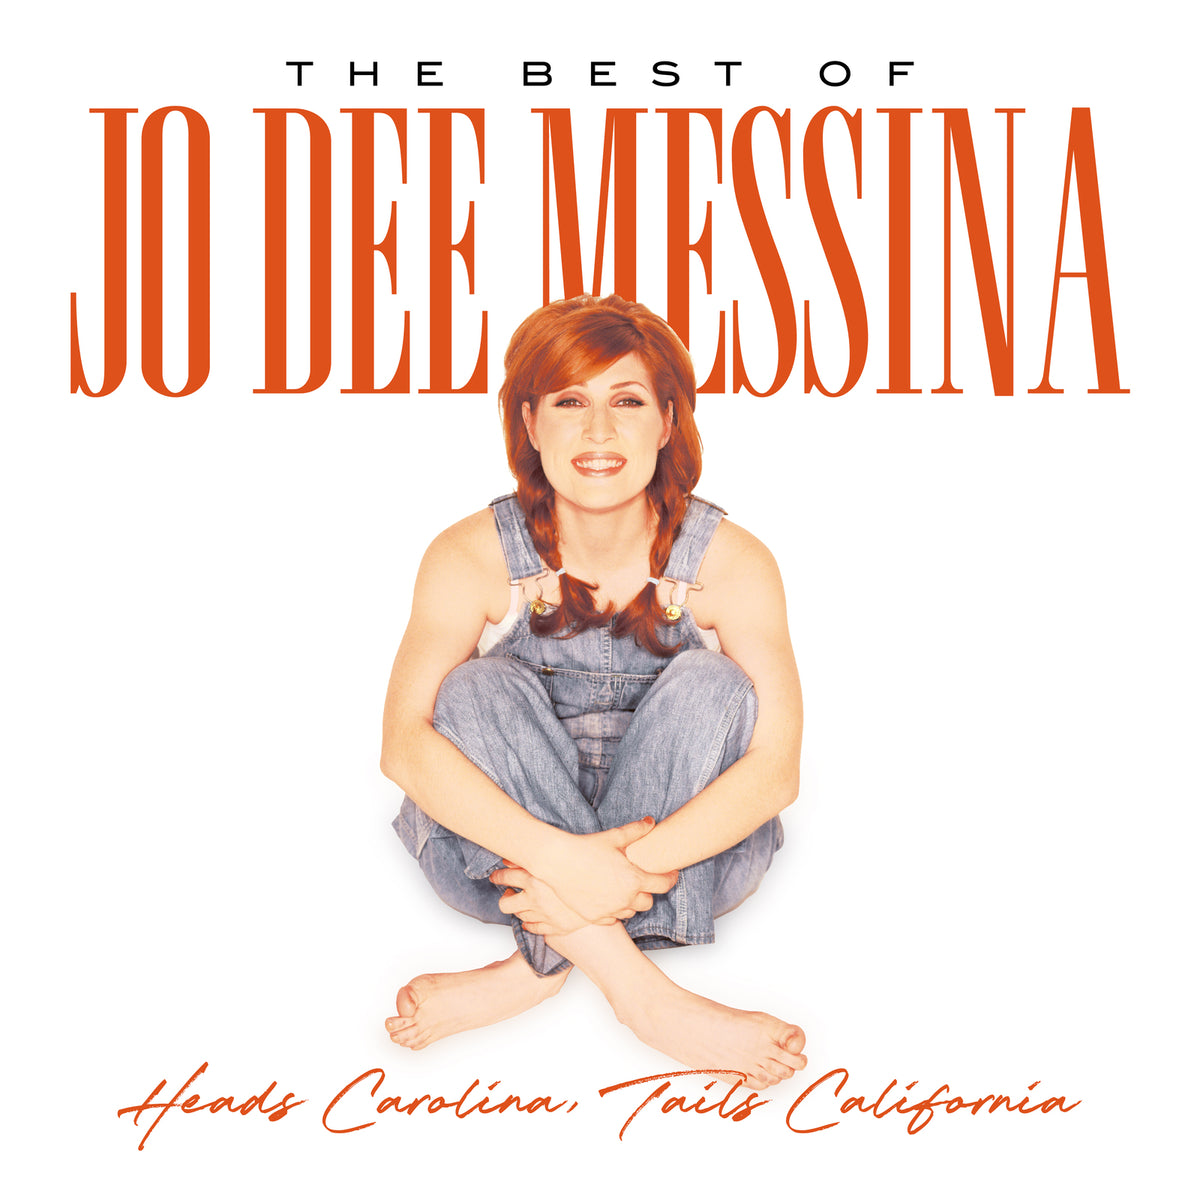 Jo Dee Messina - Heads Carolina, Tails California: The Best of Jo Dee Messina